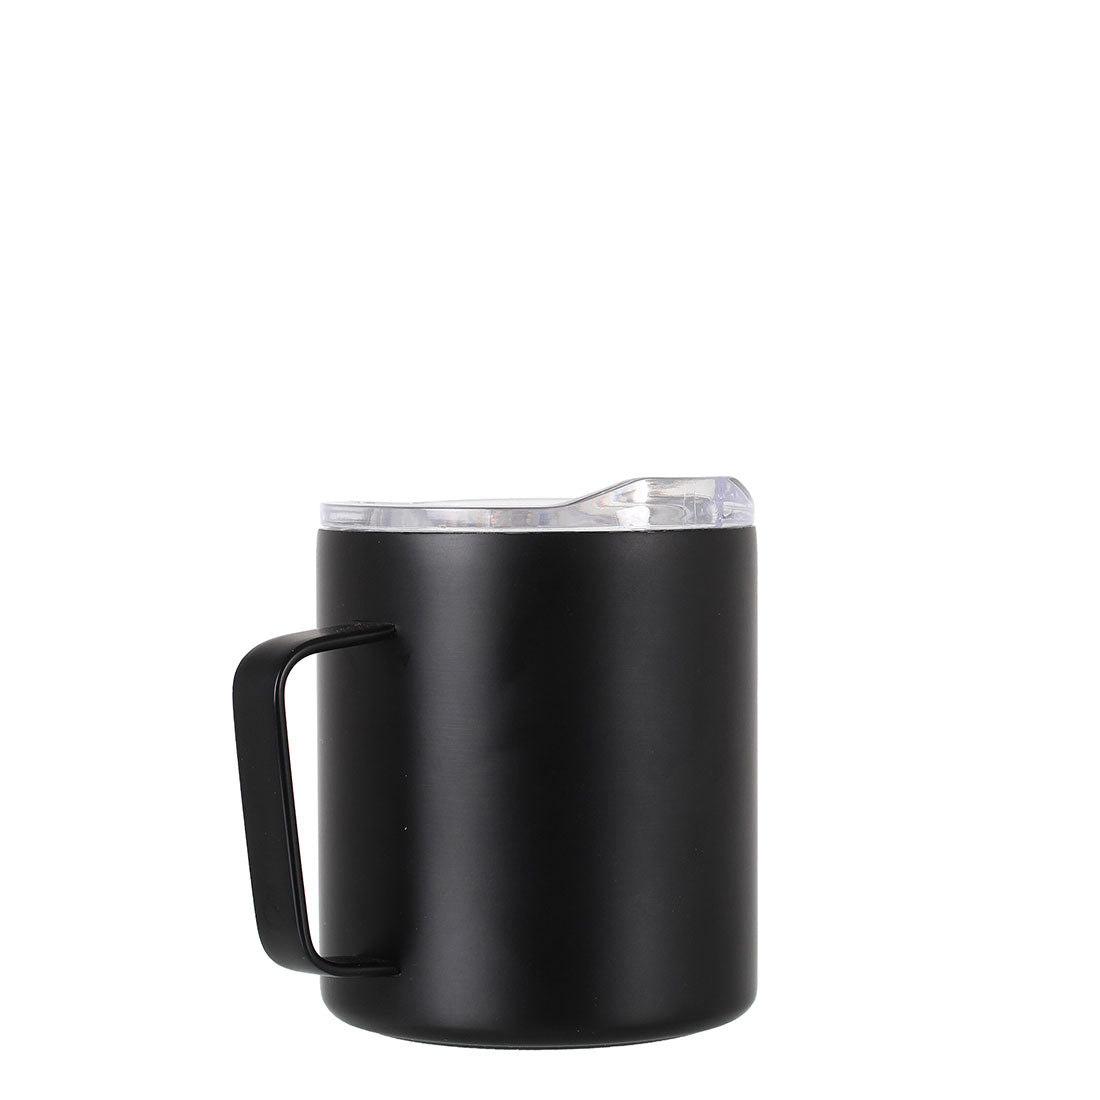 Insulated Mountain Mug